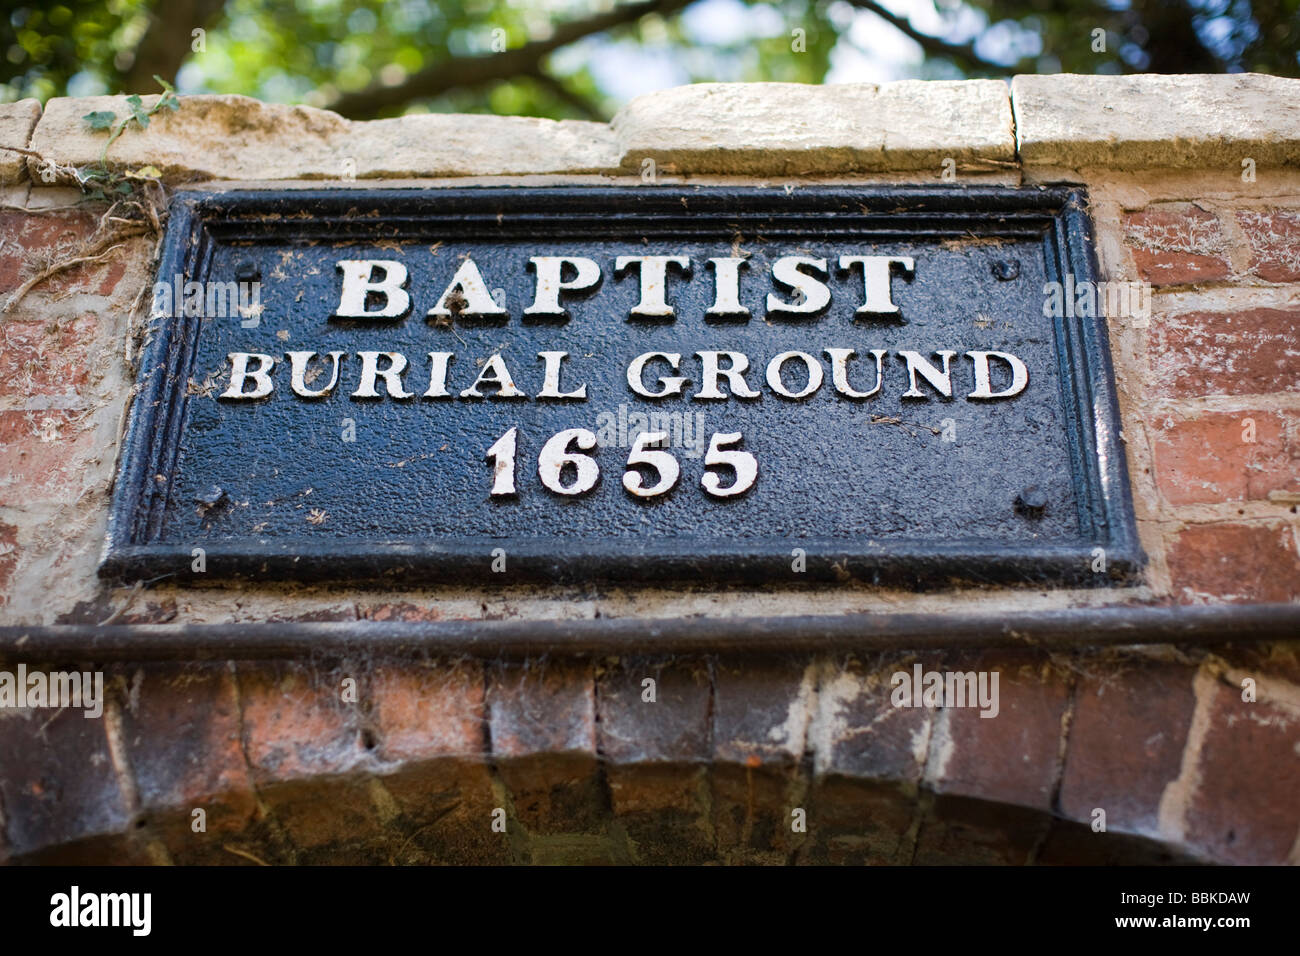 Baptist burial ground 1655, tewkesbury, Gloucestershire, UK Stock Photo